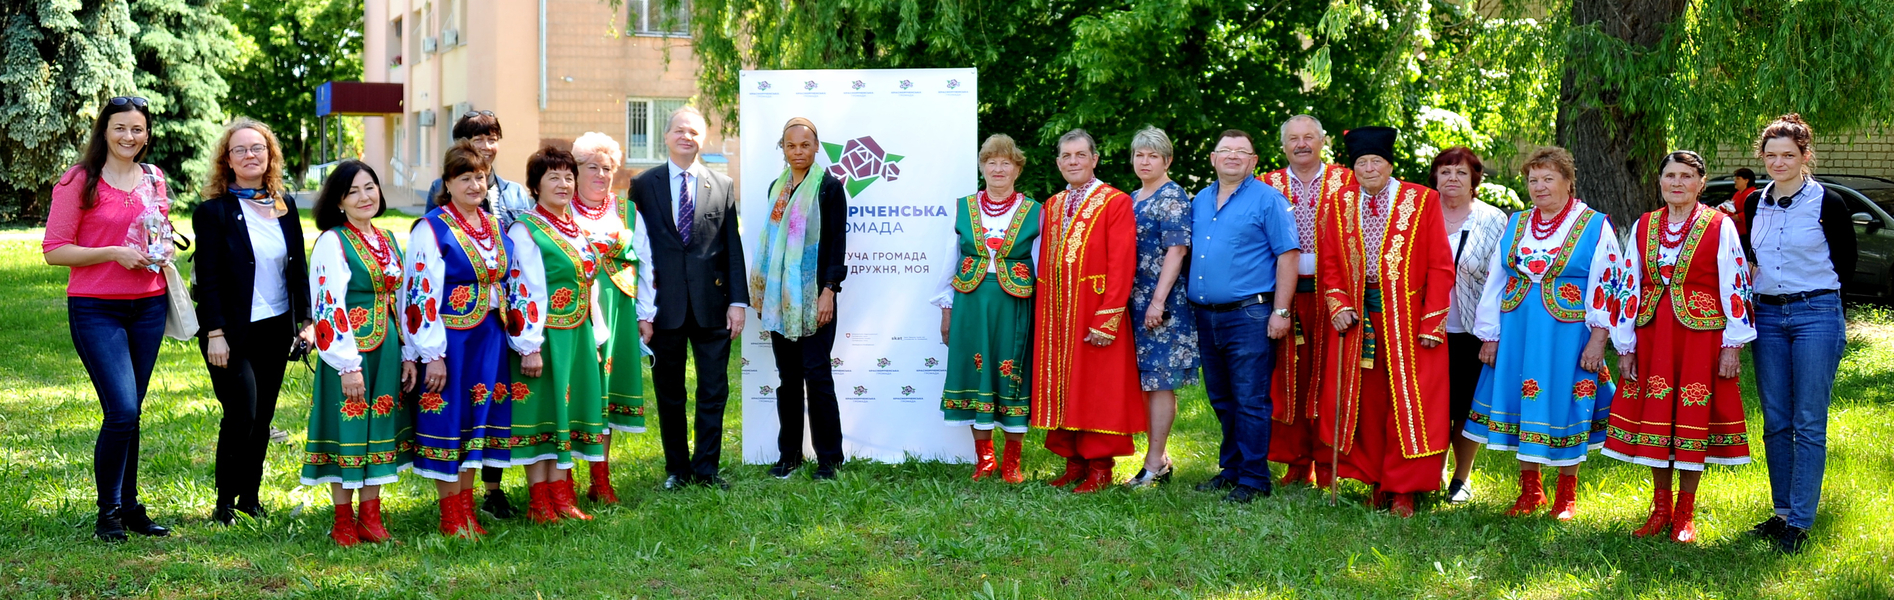 Representatives of Swtzerland have visited a partner hromada in the Luhansk oblast